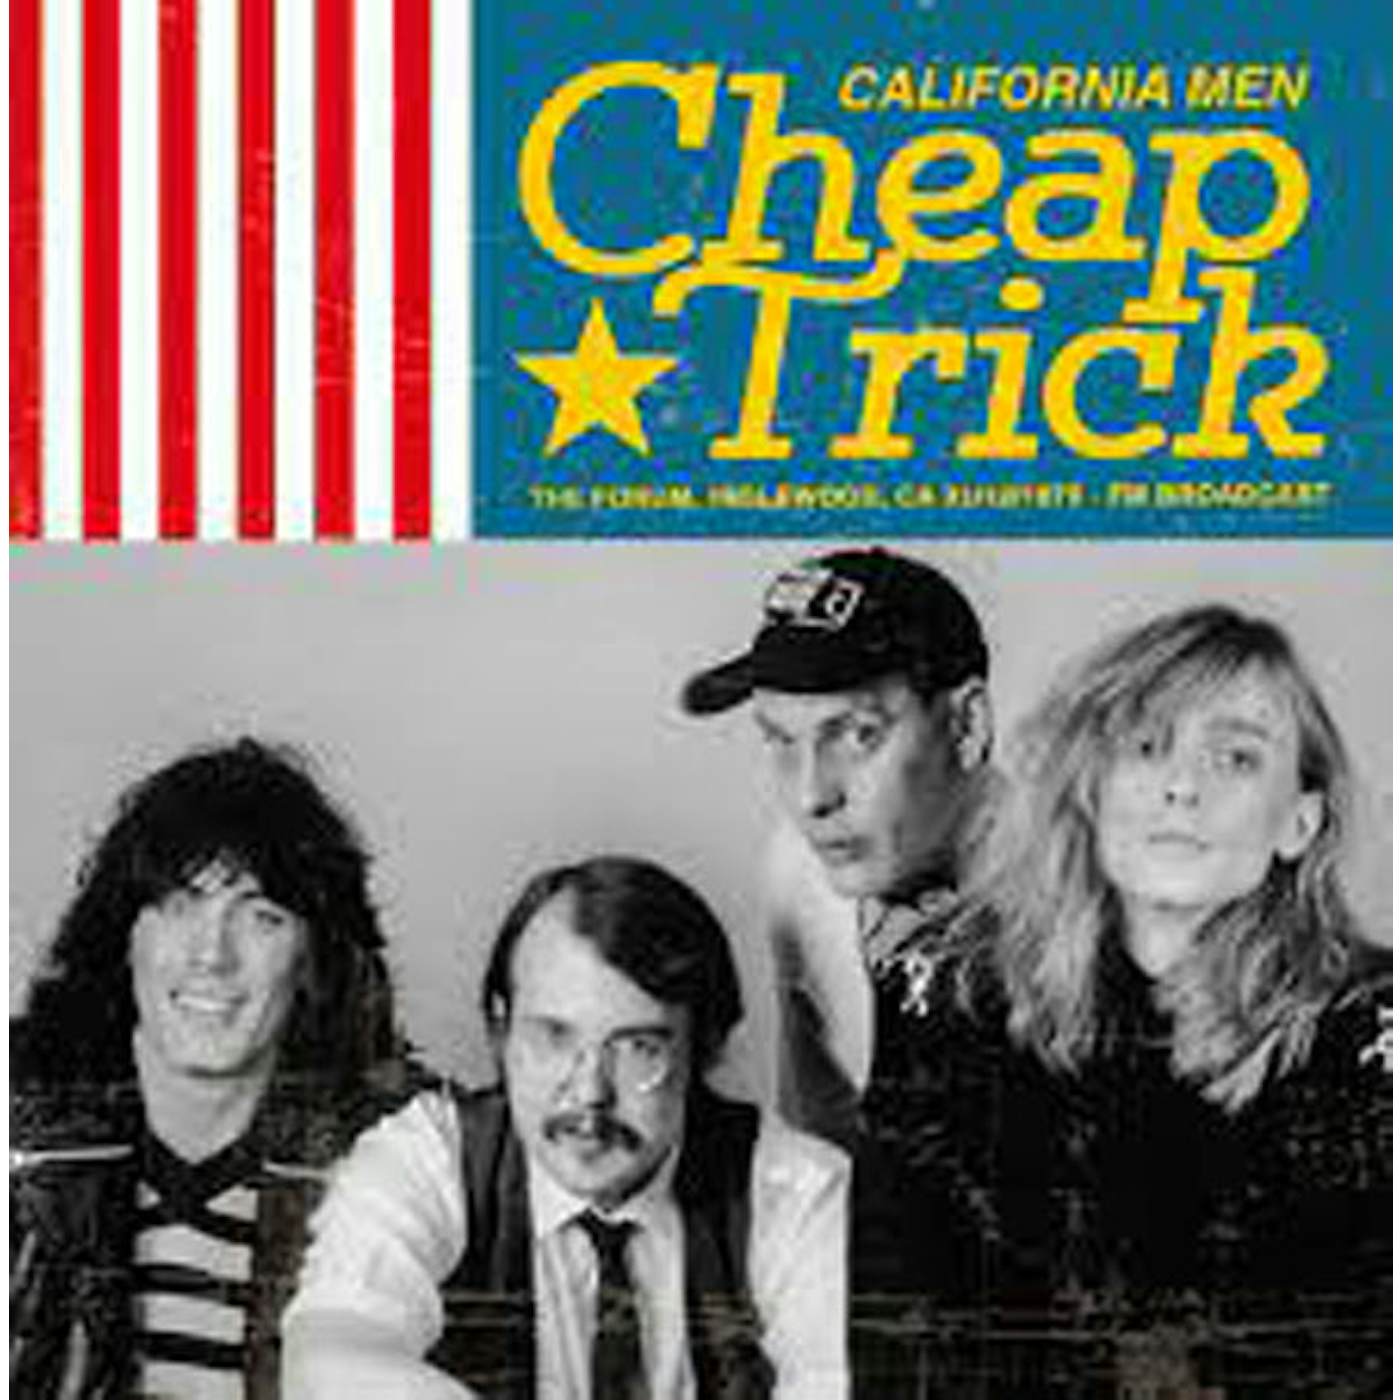 Cheap Trick LP - California Men 1979-12-31 - The Forum, Inglewood, Ca (Color Vinyl)